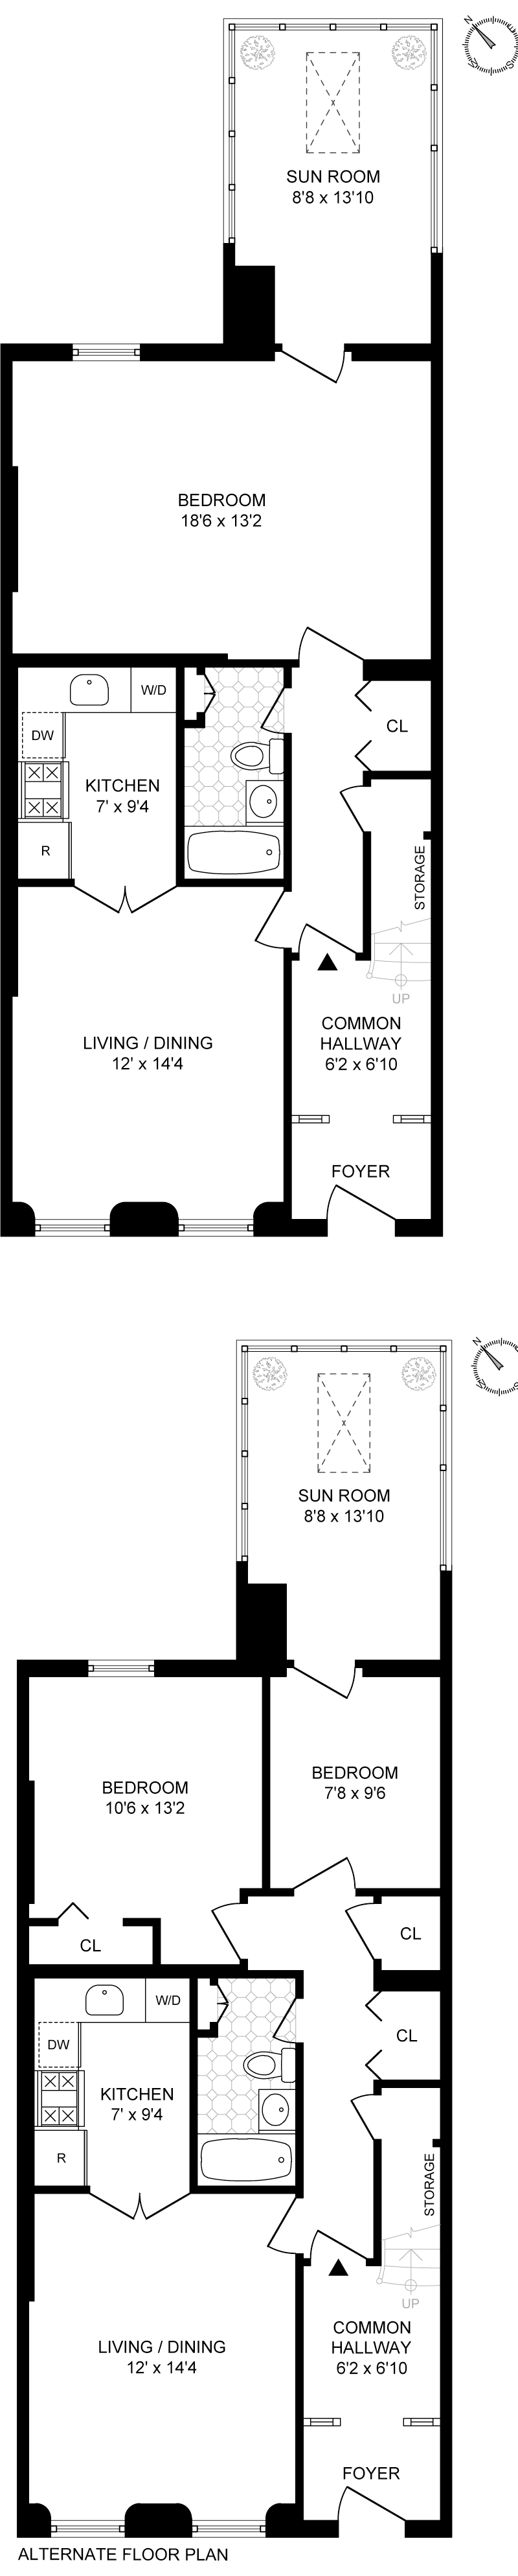 Floorplan for 393 8th St, 2